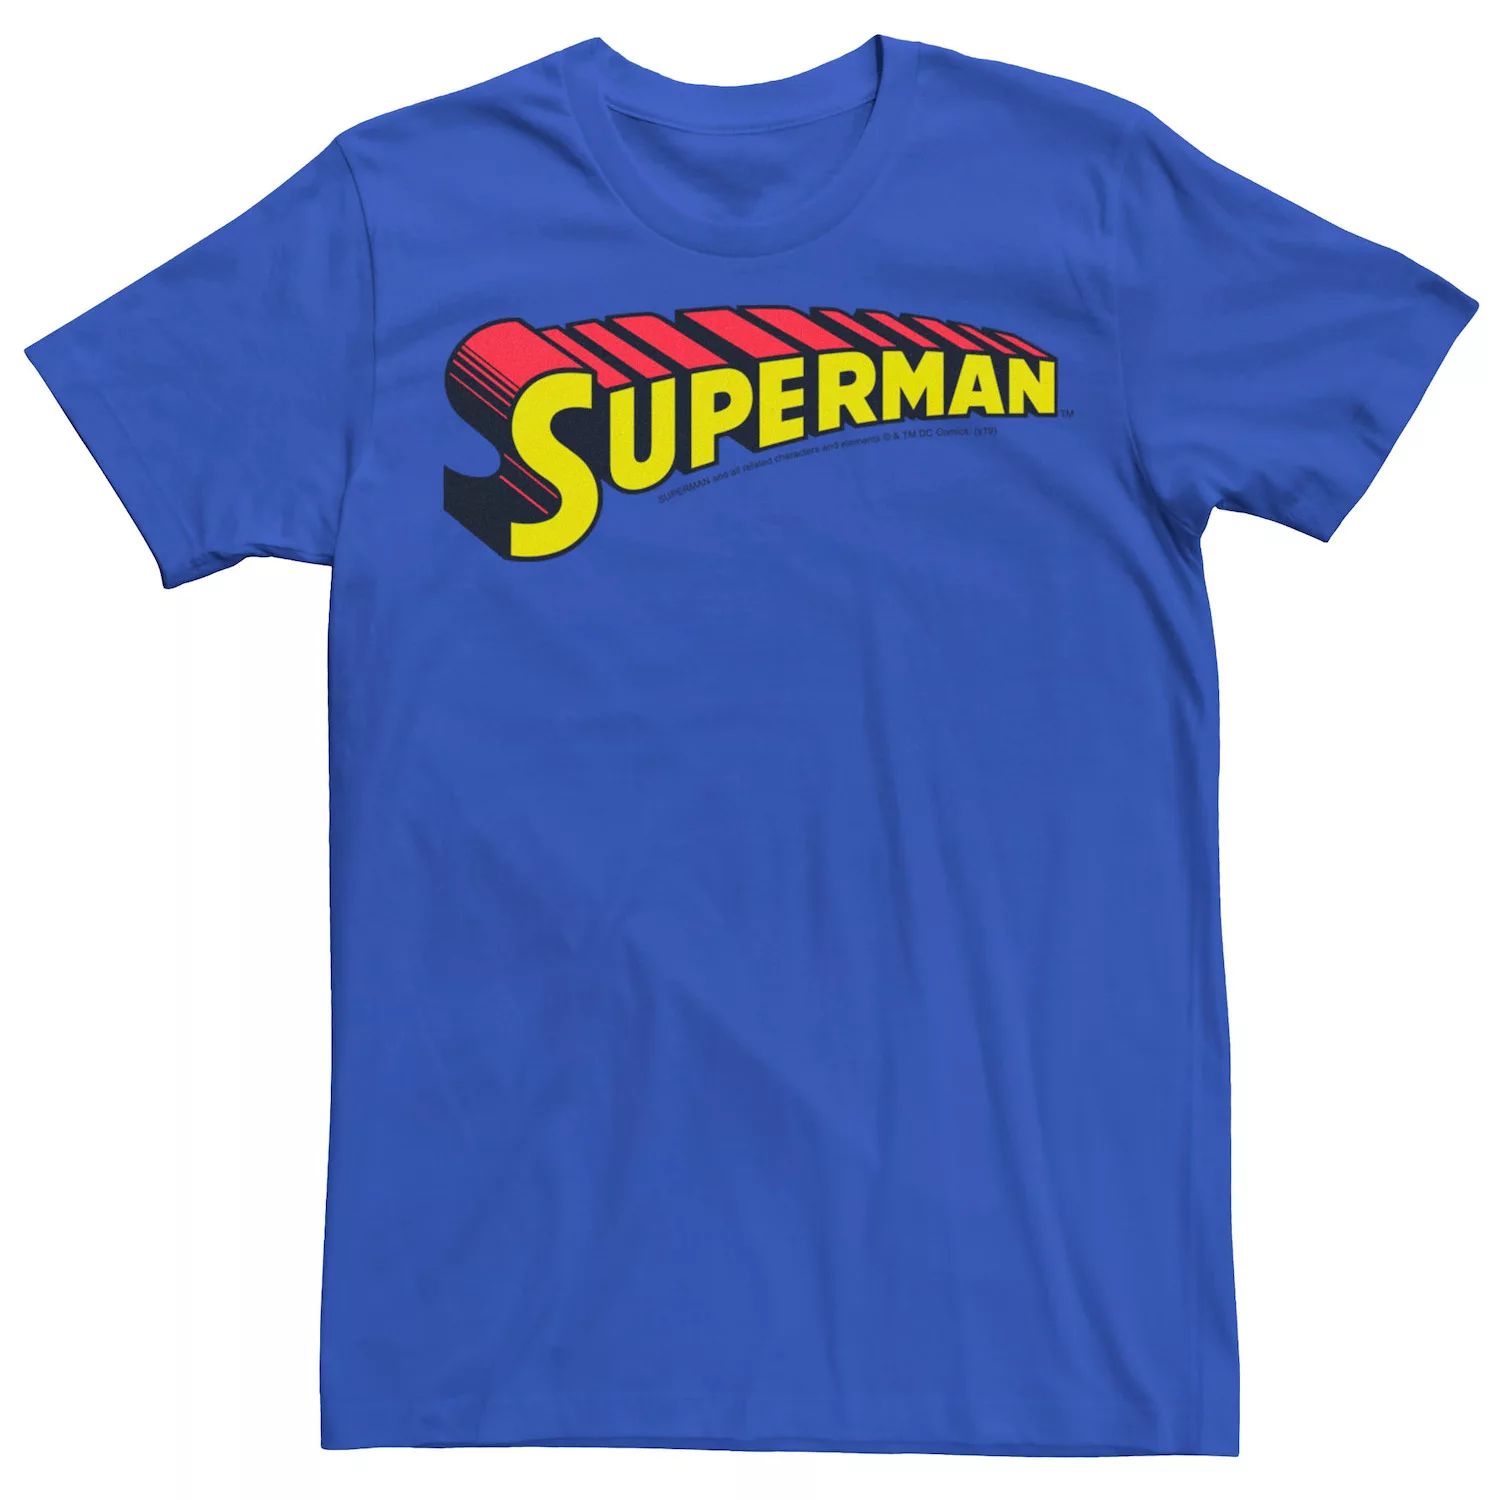 Мужская футболка DC Comics Superman с винтажным текстовым рисунком Licensed Character